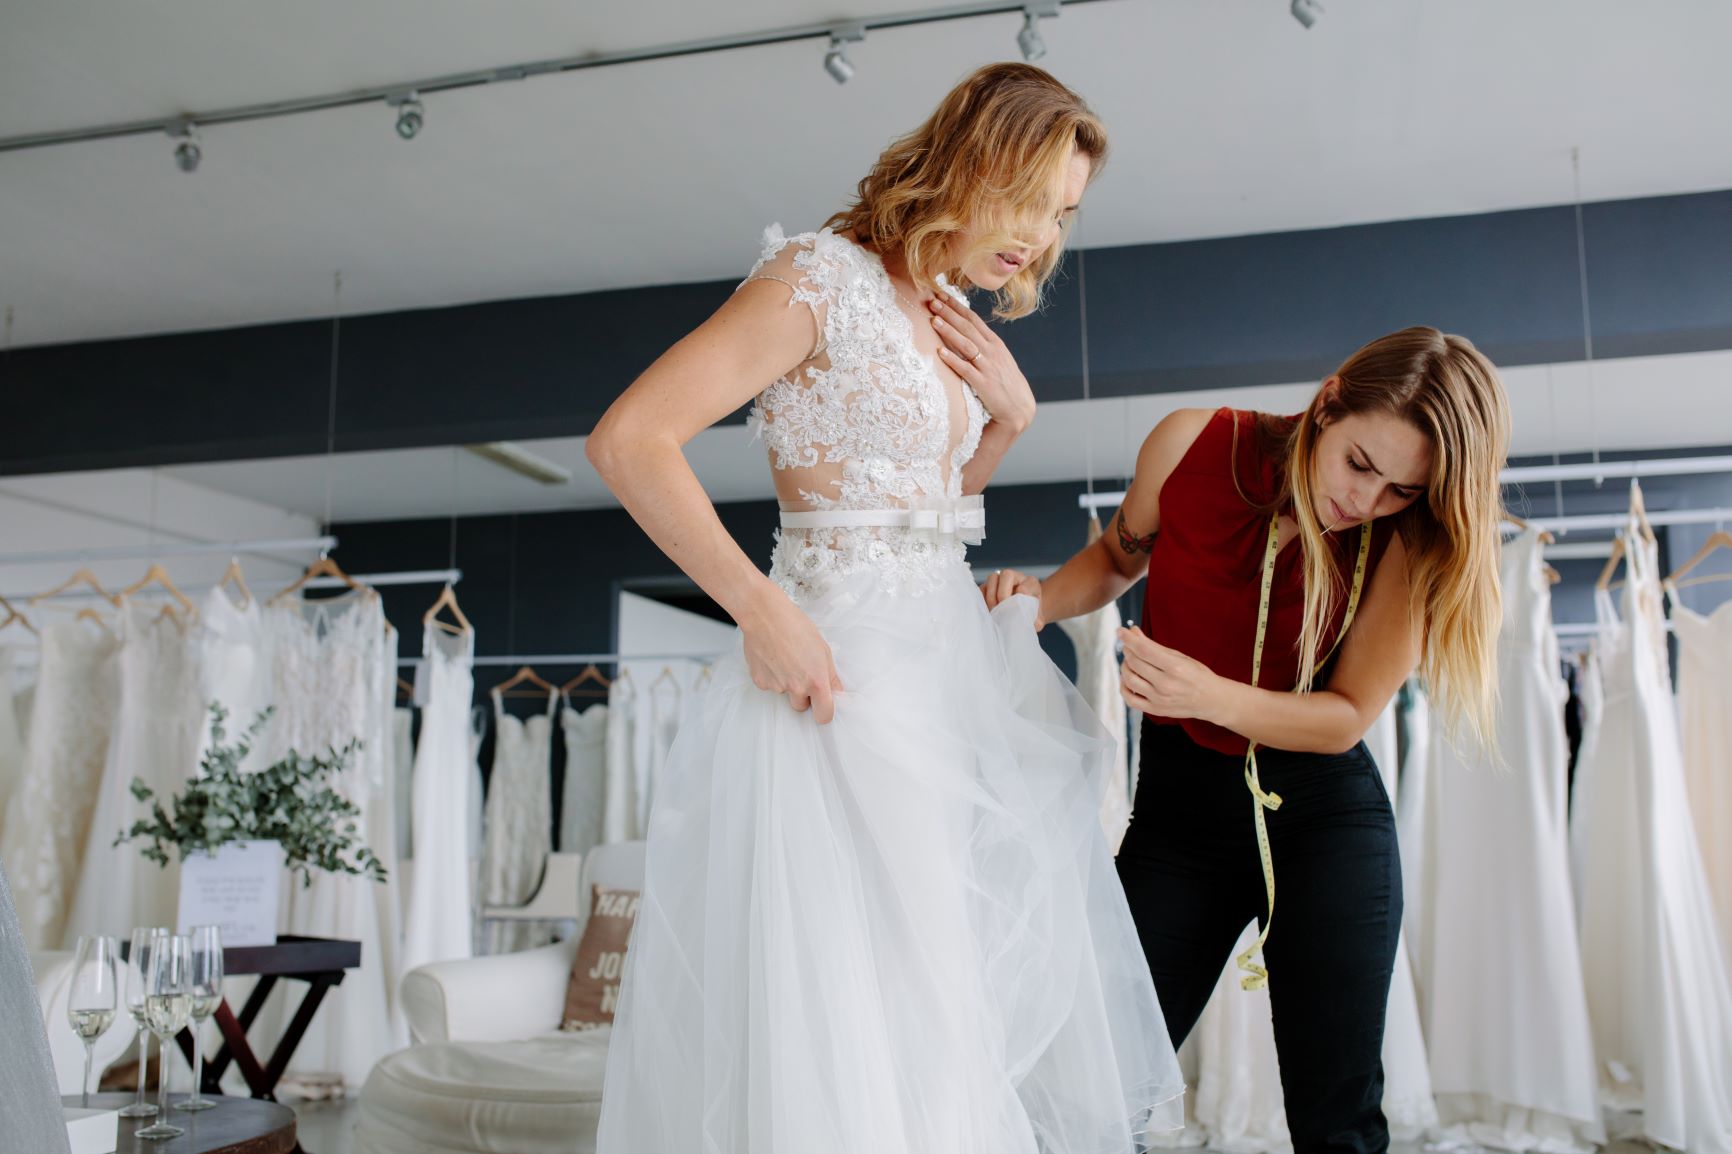 How To Take Up A Wedding Dress